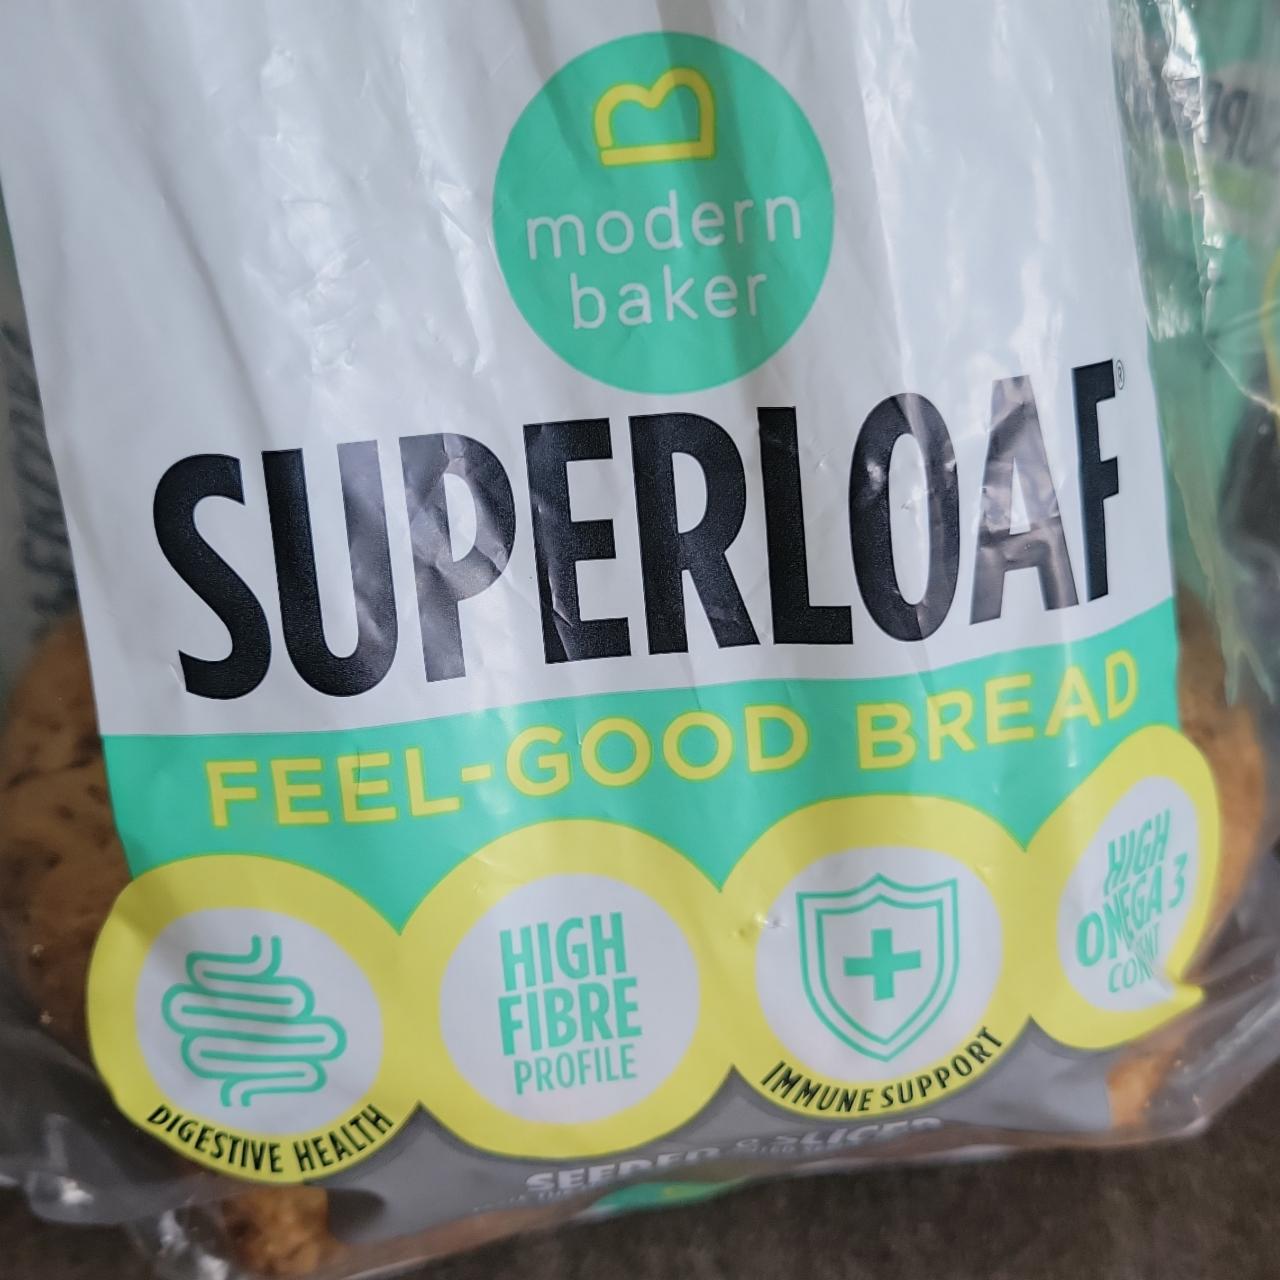 Fotografie - Superloaf feel-good bread Modern baker